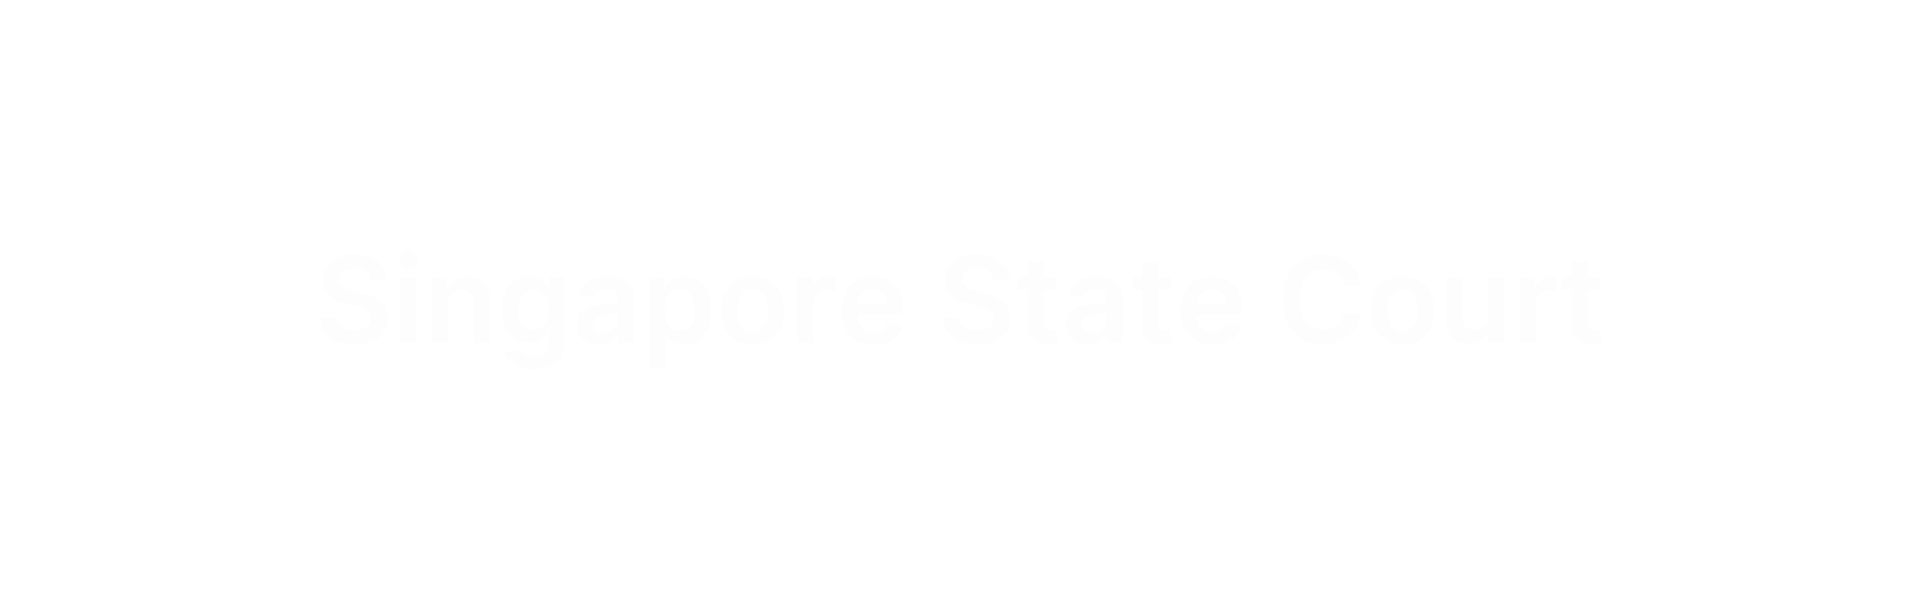 Singapore State Court